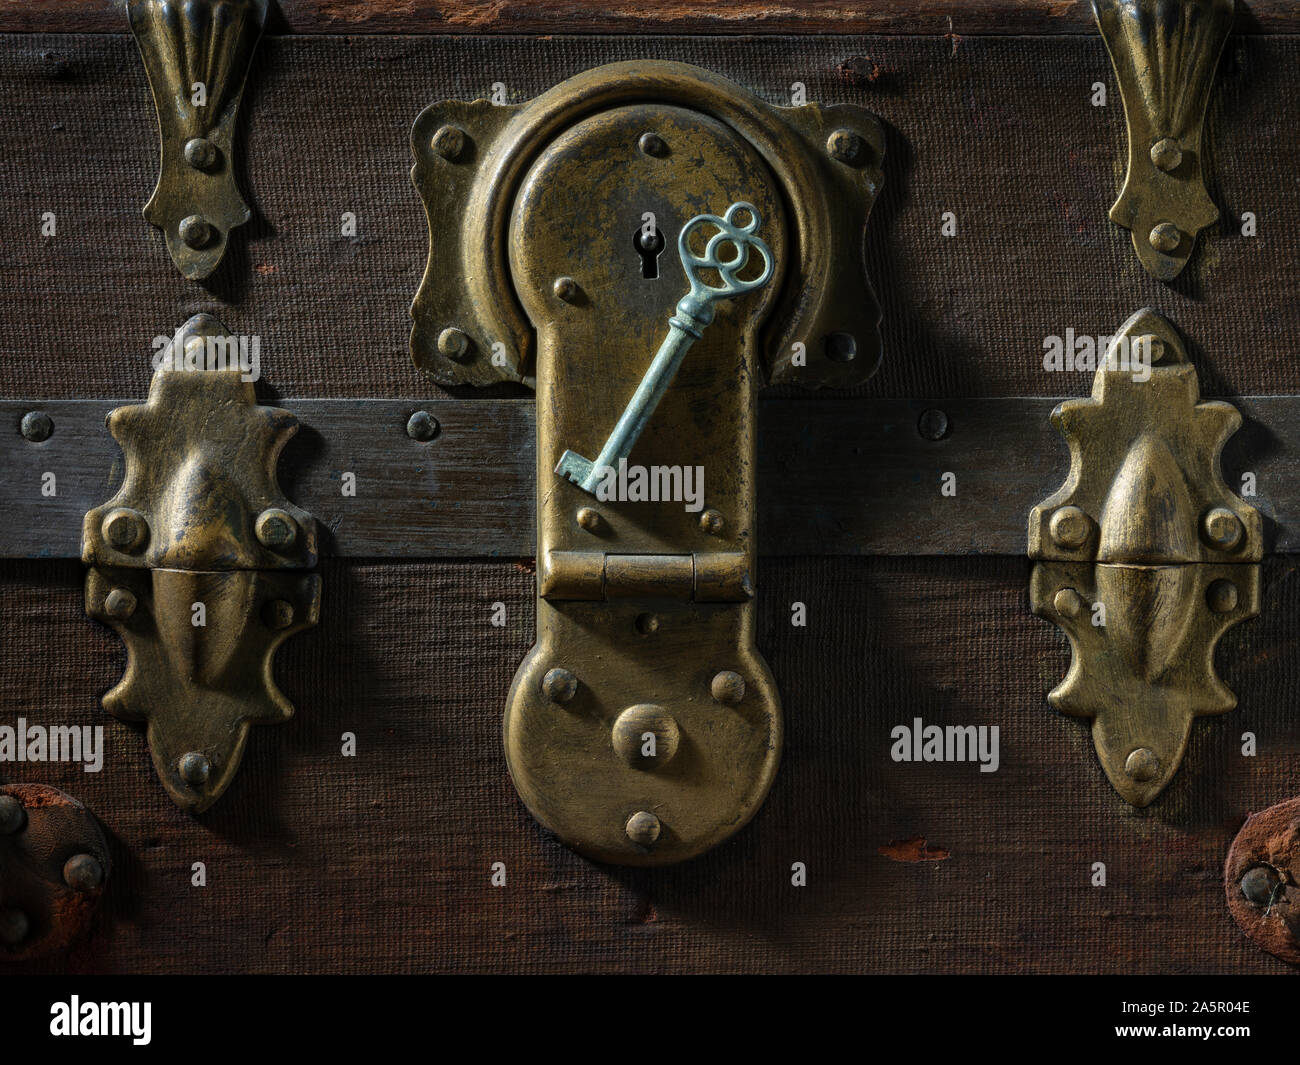 Alte Schlüssel antique vintage Steamer trunk Fall detail Stockfotografie -  Alamy